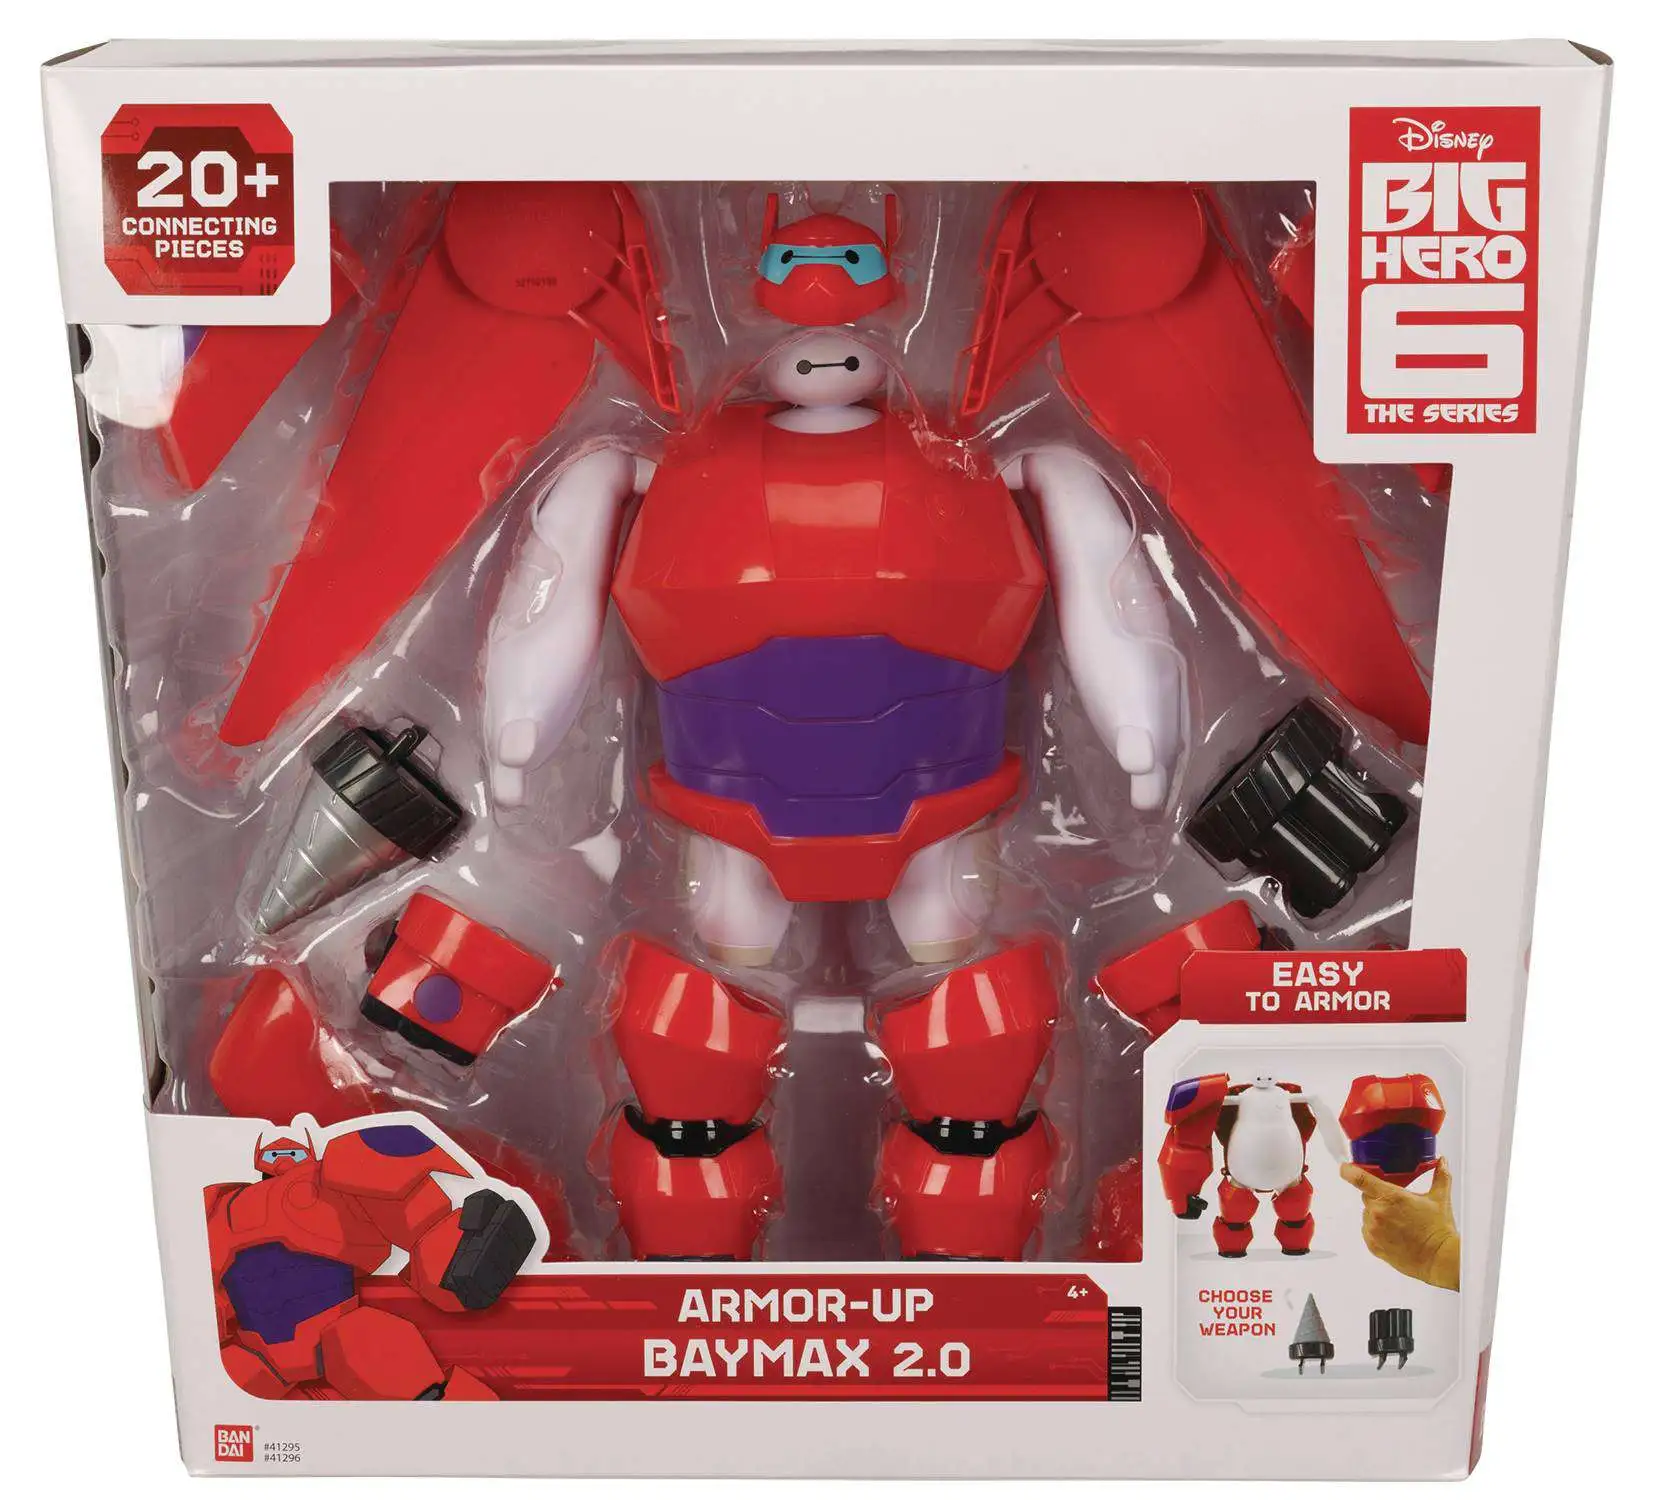 Disney Big Hero 6 The Series Armor-Up Baymax 2.0 8 Action Figure 